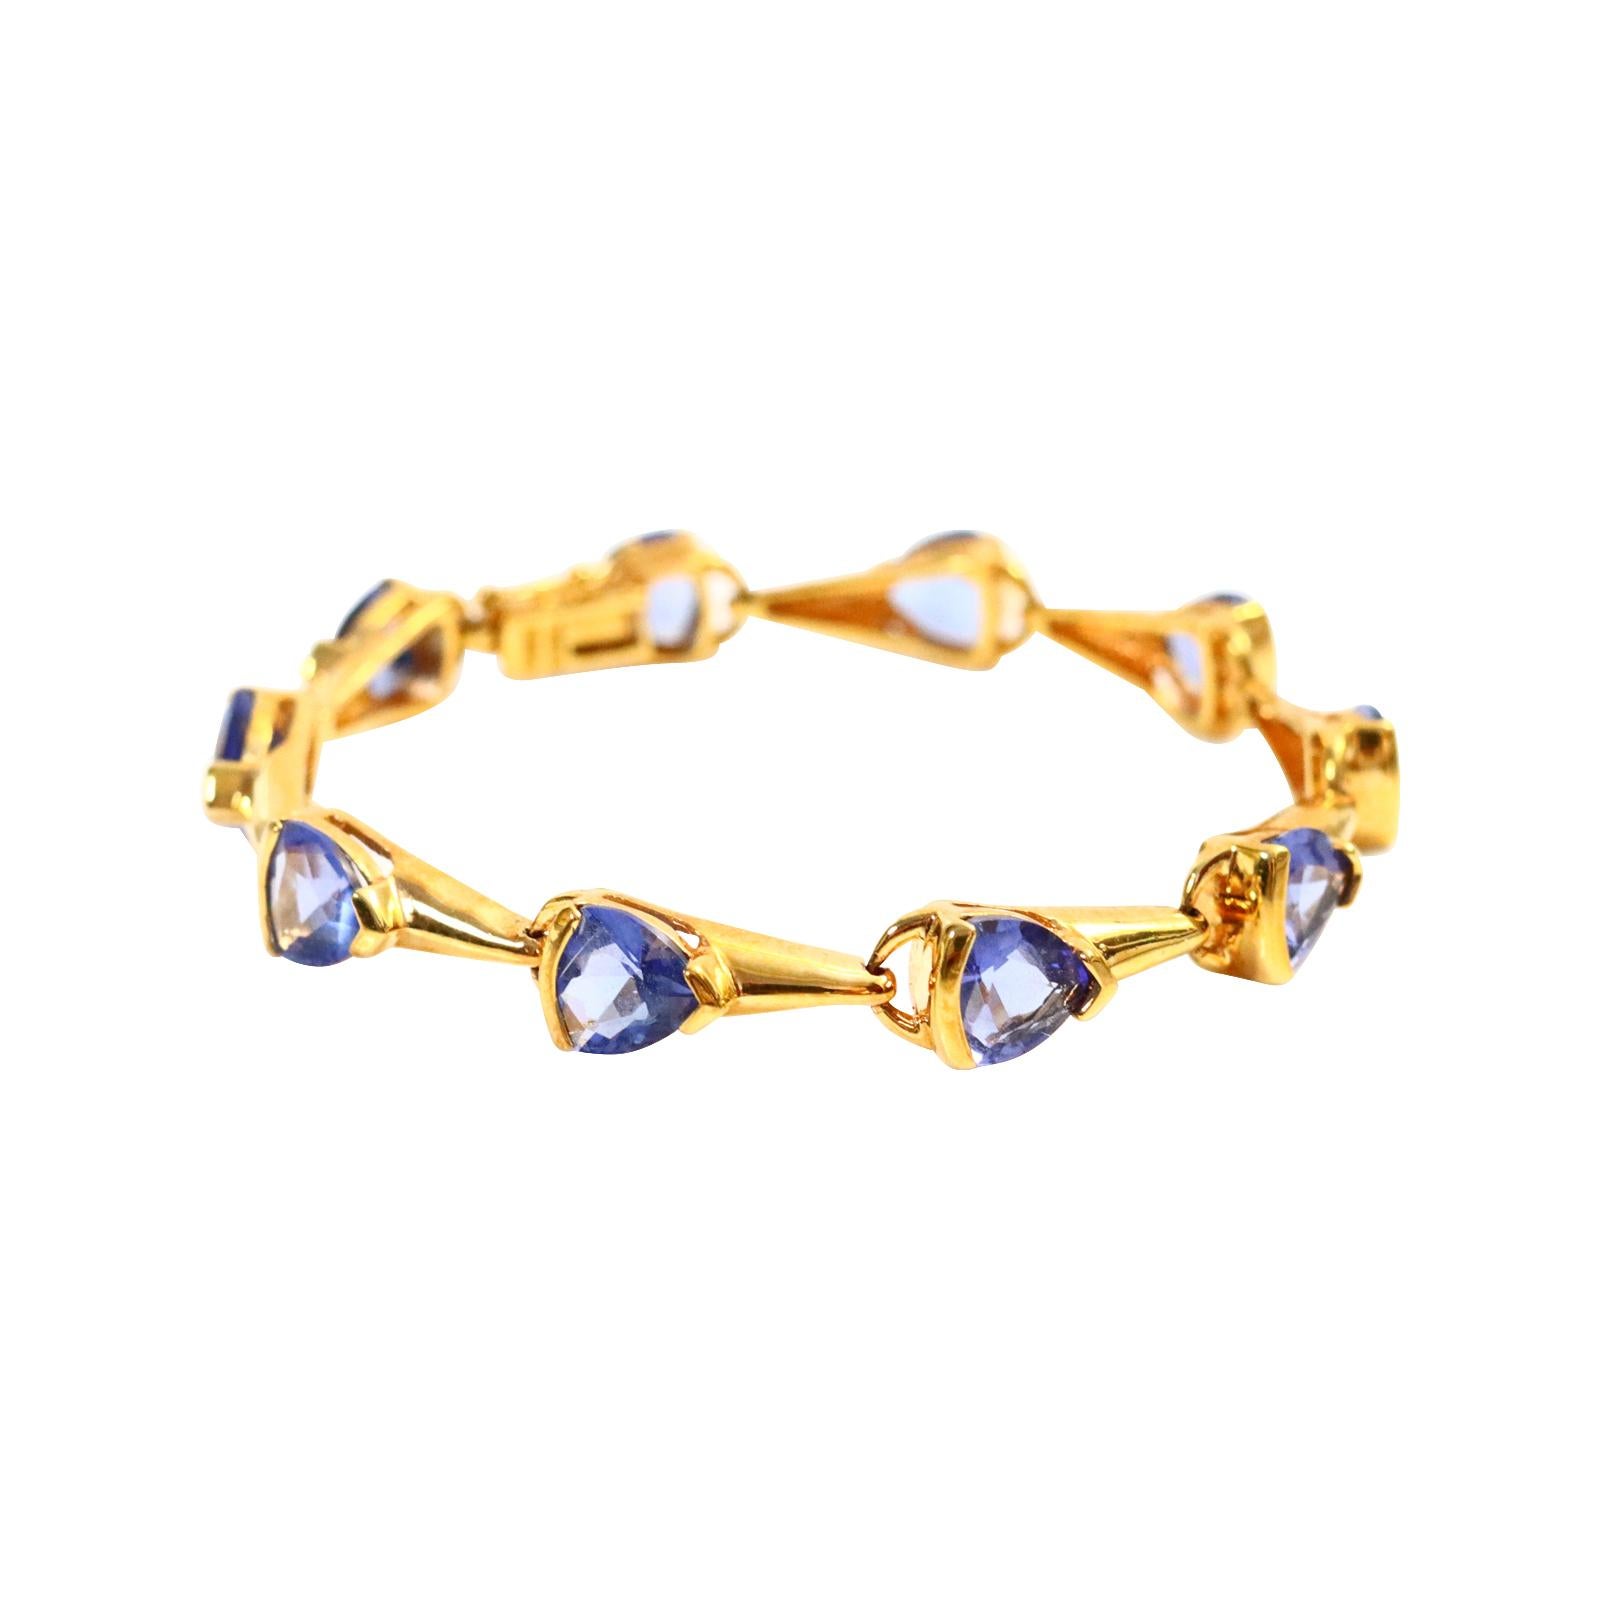 Modern Vintage Sterling Gold Tone Link Bracelet with Blue Diamante Stones Circa 1990s For Sale